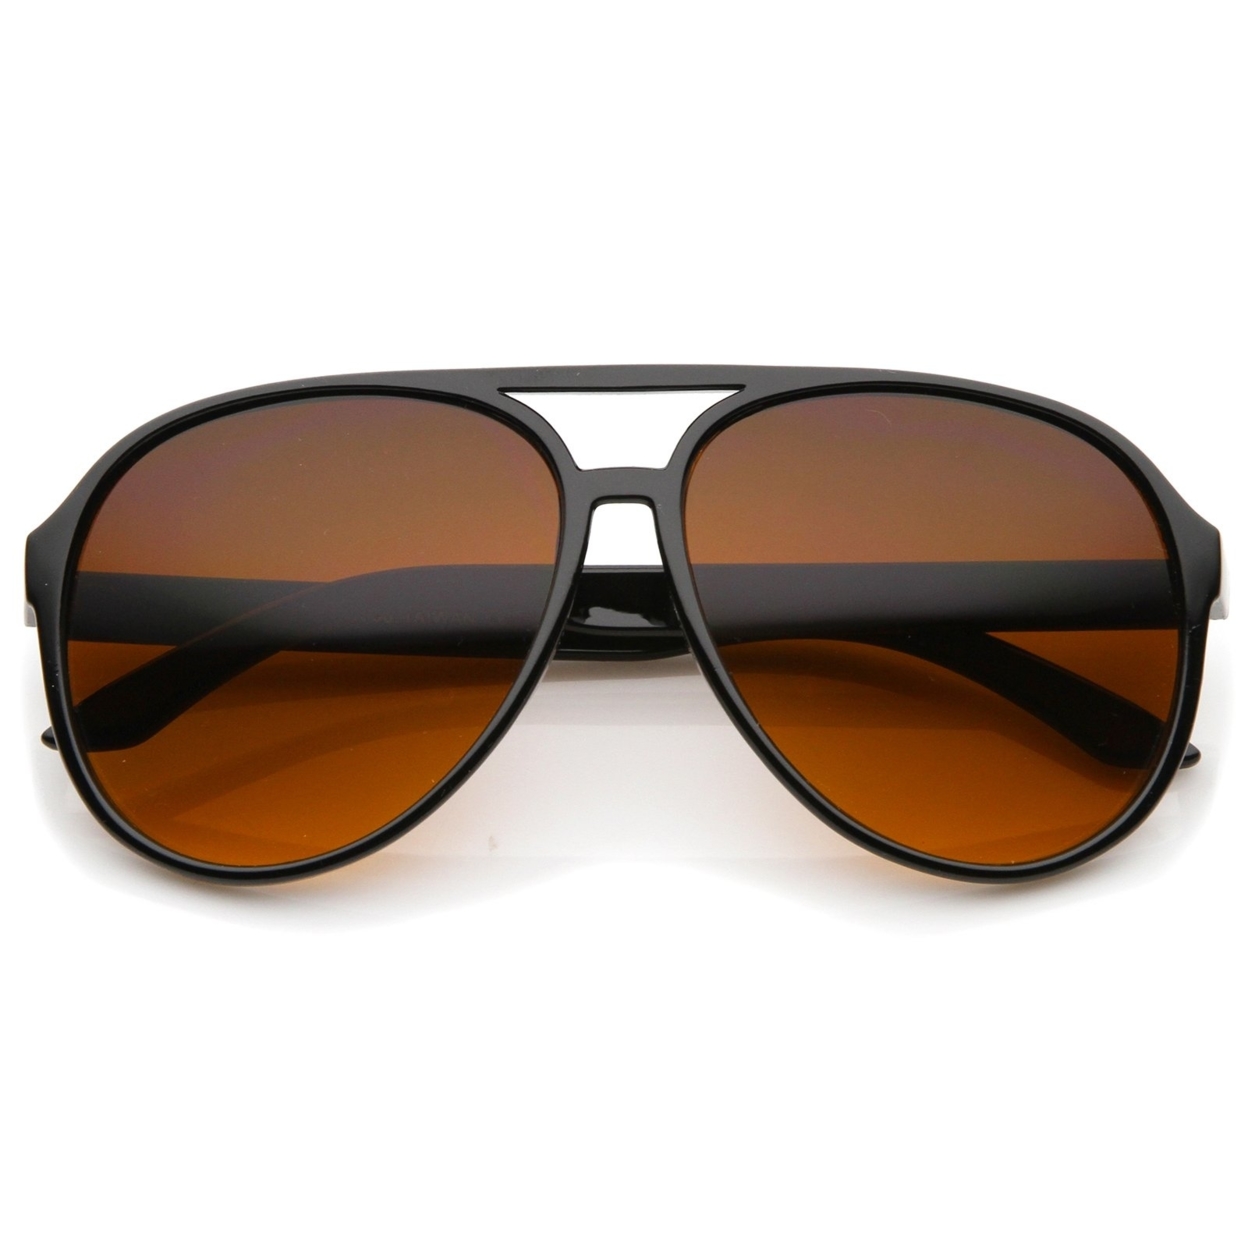 Retro Large Blue Blocking Lens Aviator Sunglasses 60mm - 2-Pack , Black/Orange